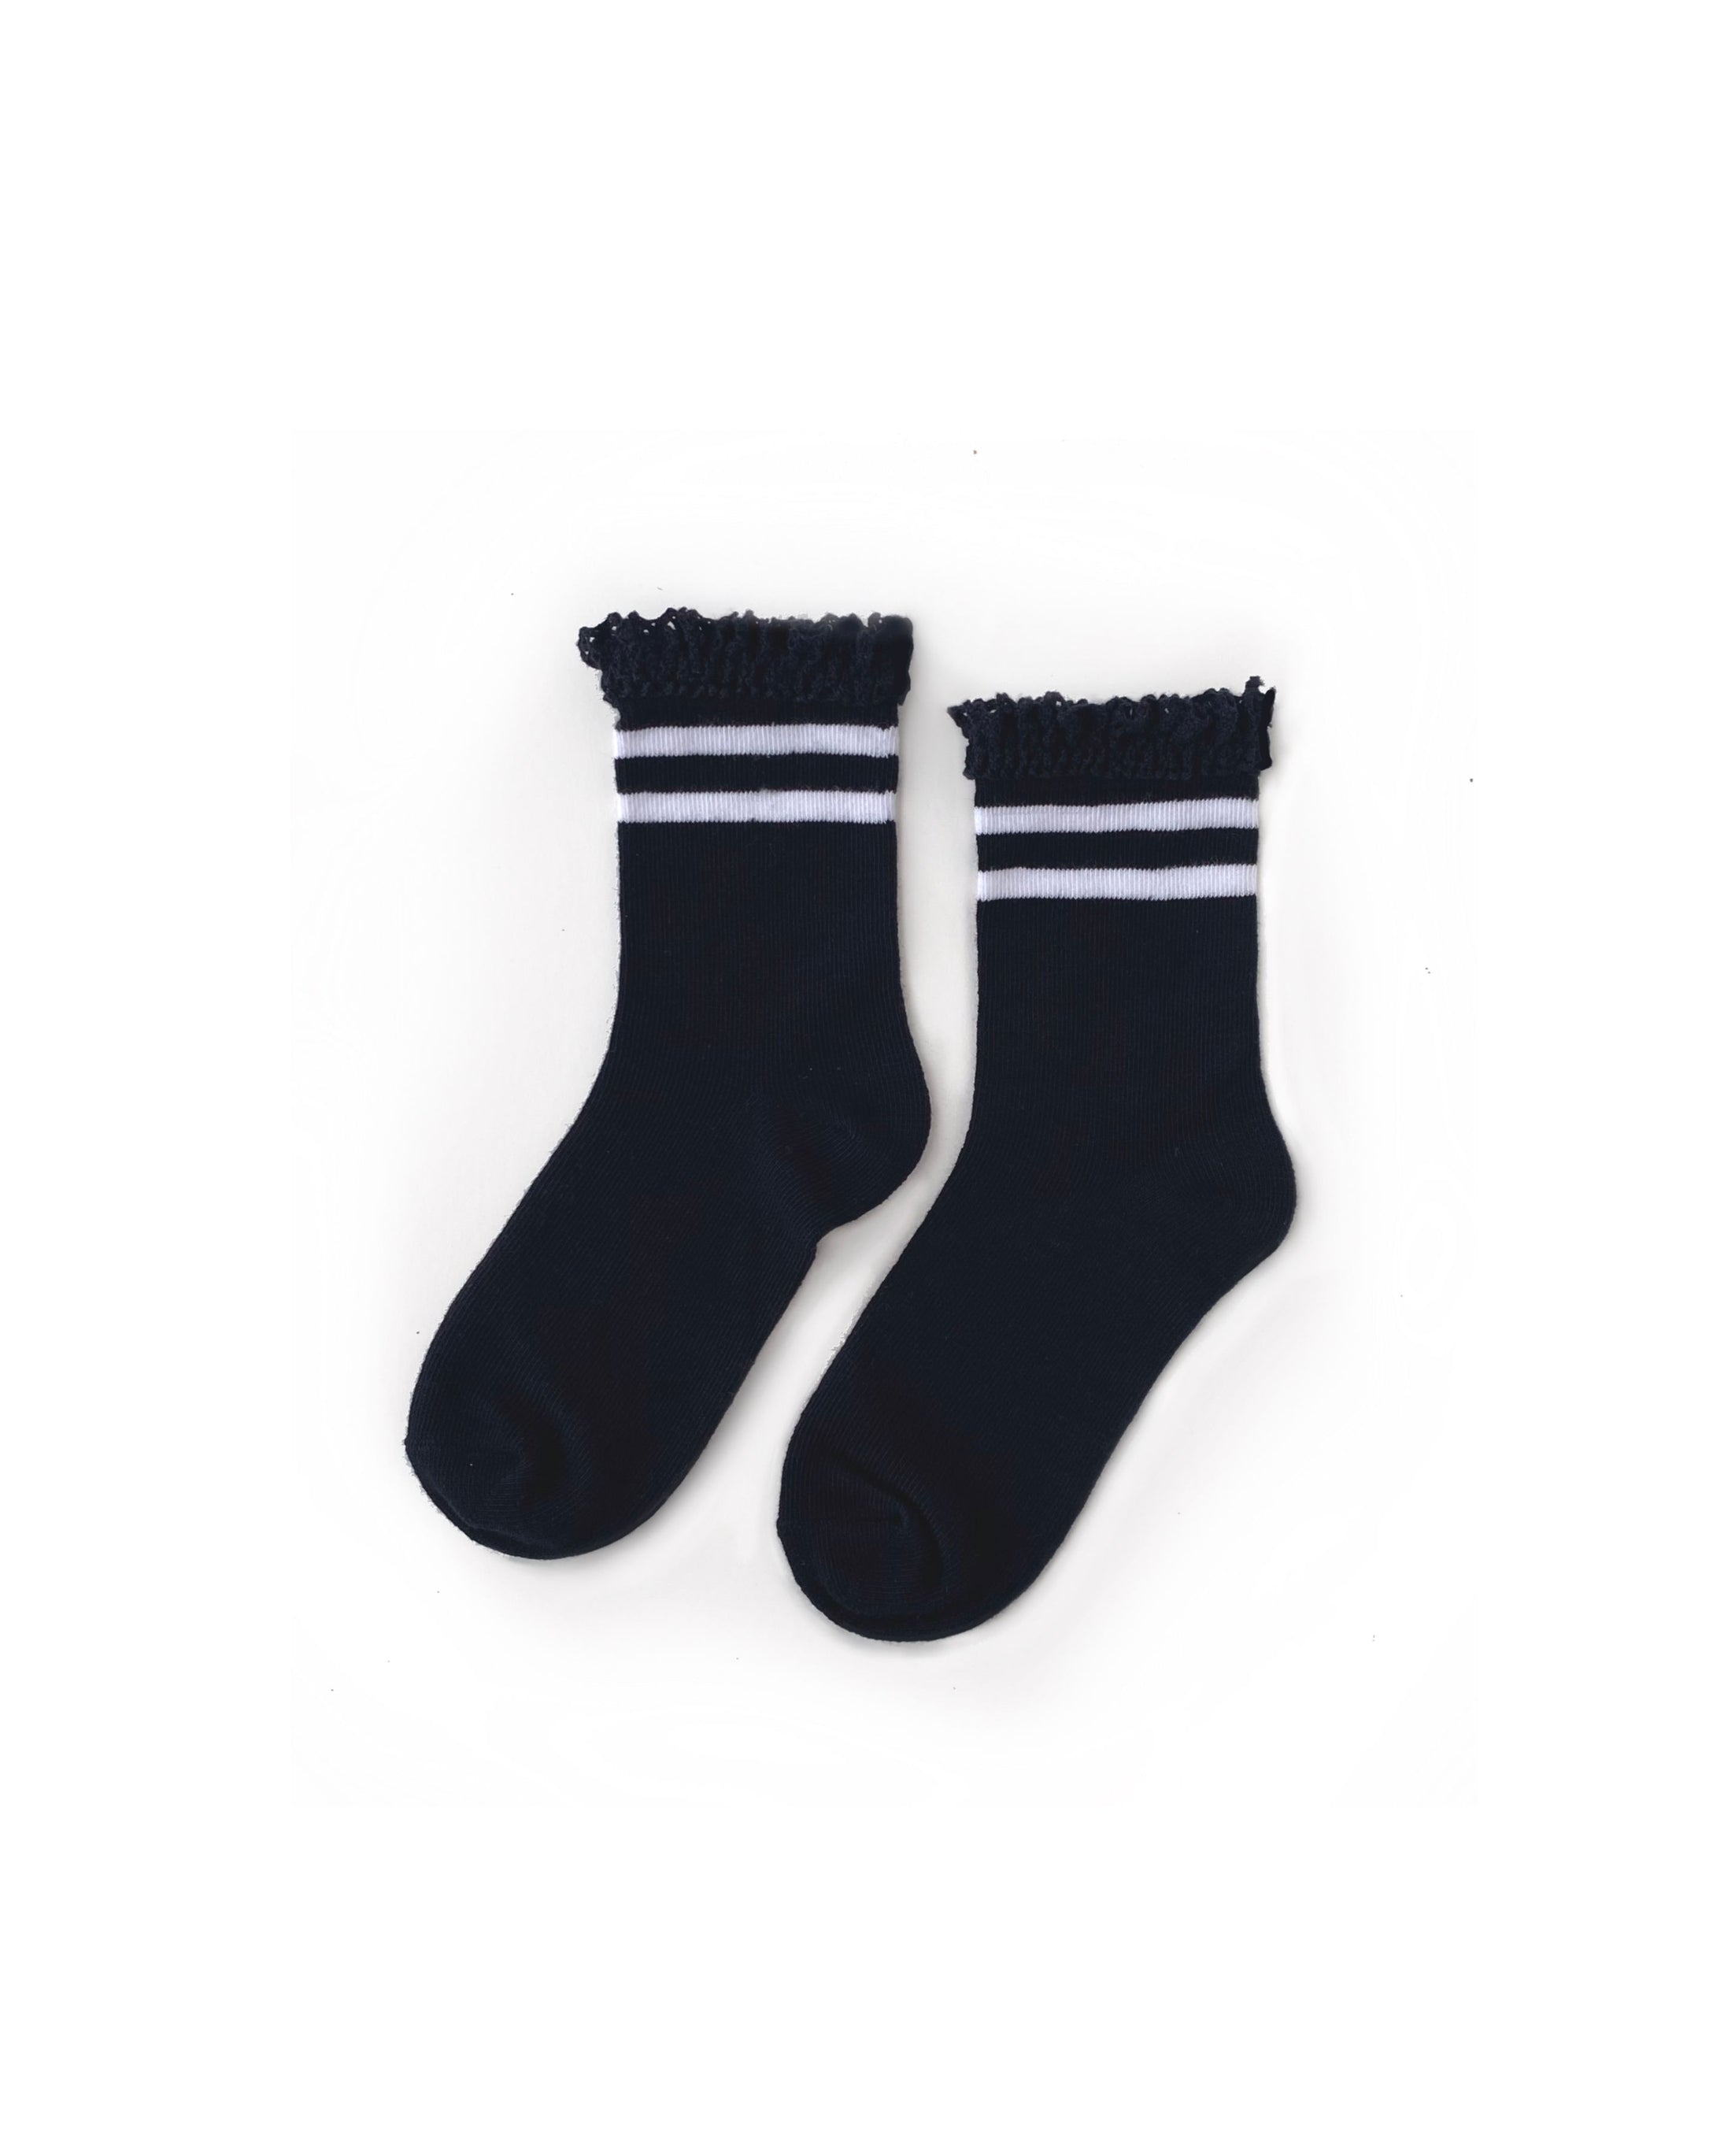 Black with White Stripes Lace Midi Socks  A Touch of Magnolia Boutique   